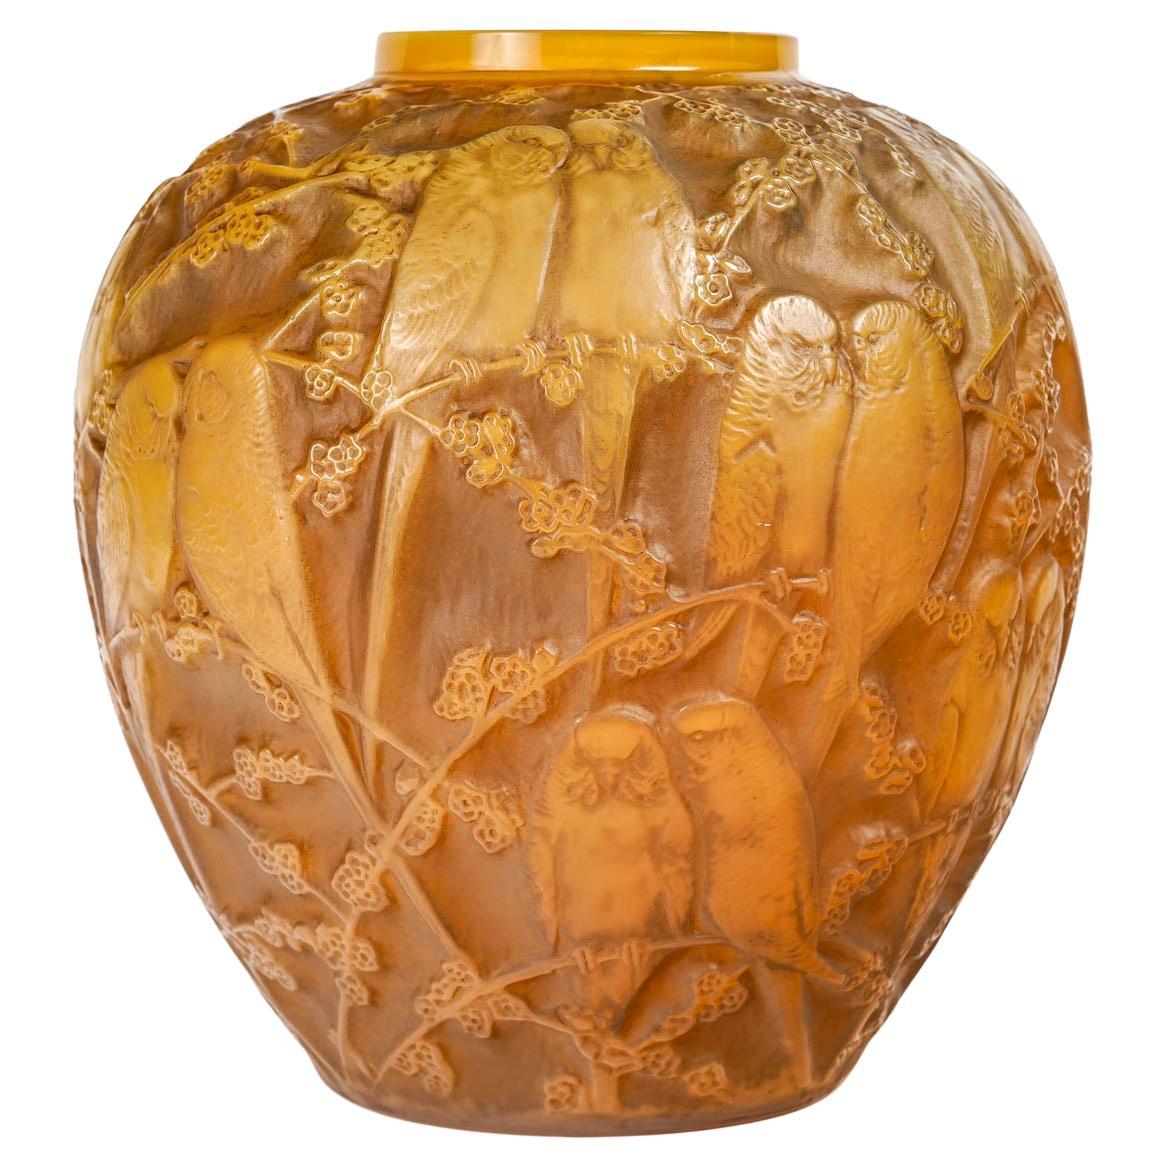 1919 Rene Lalique Vase Perruches Gehäuse Butterscotch Glas mit Sepia Patina